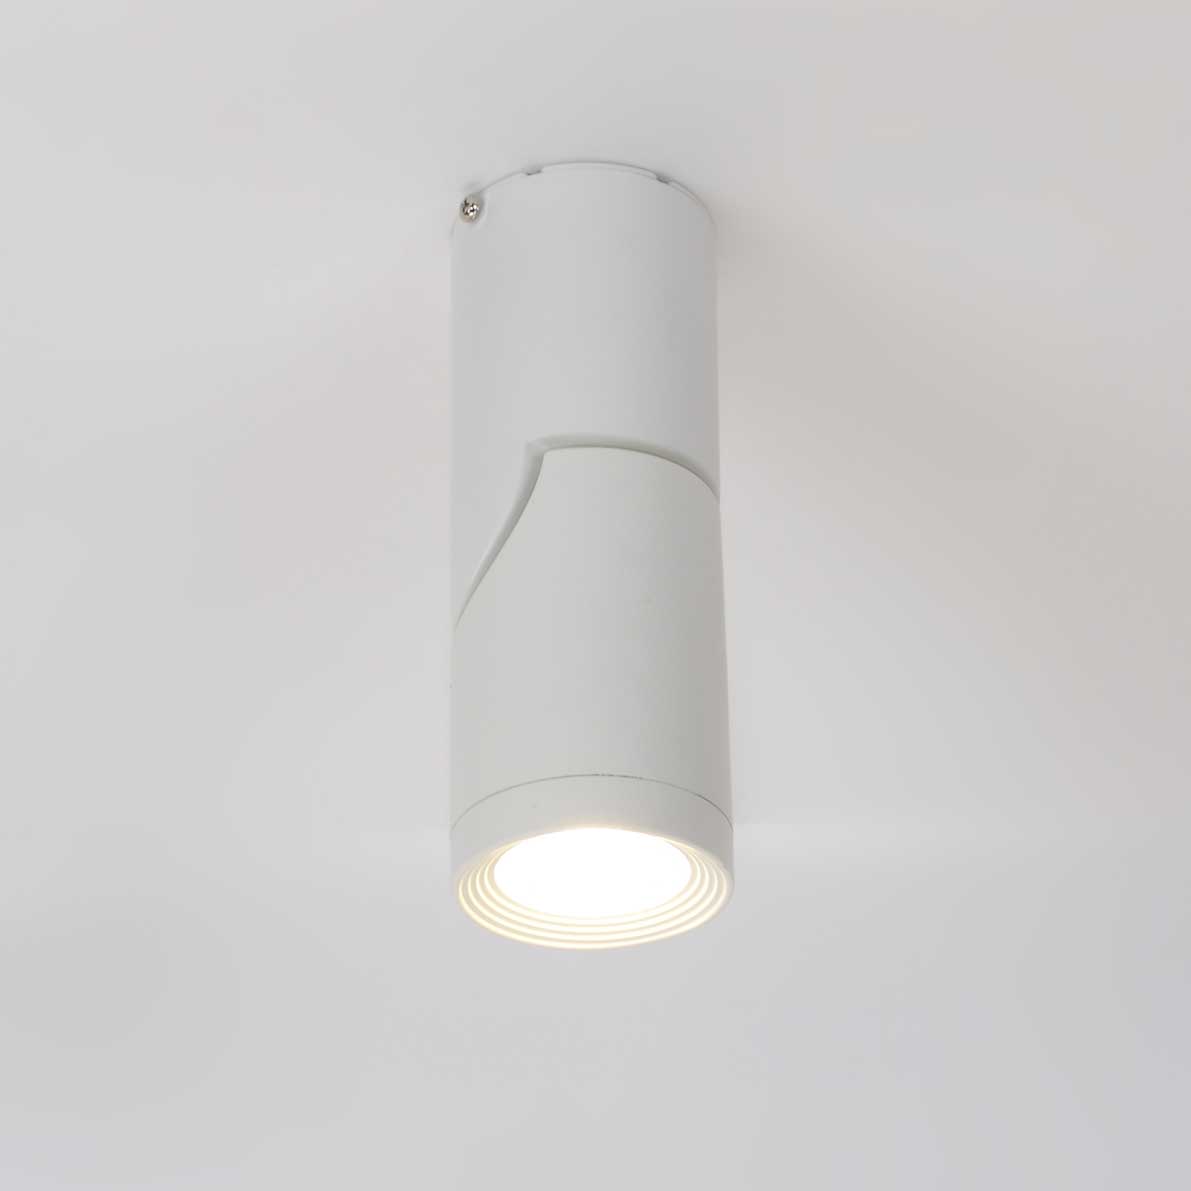 Светодиодные светильники Светодиодный светильник JH-A142 White housing GB16 (15W, 220V, day white)